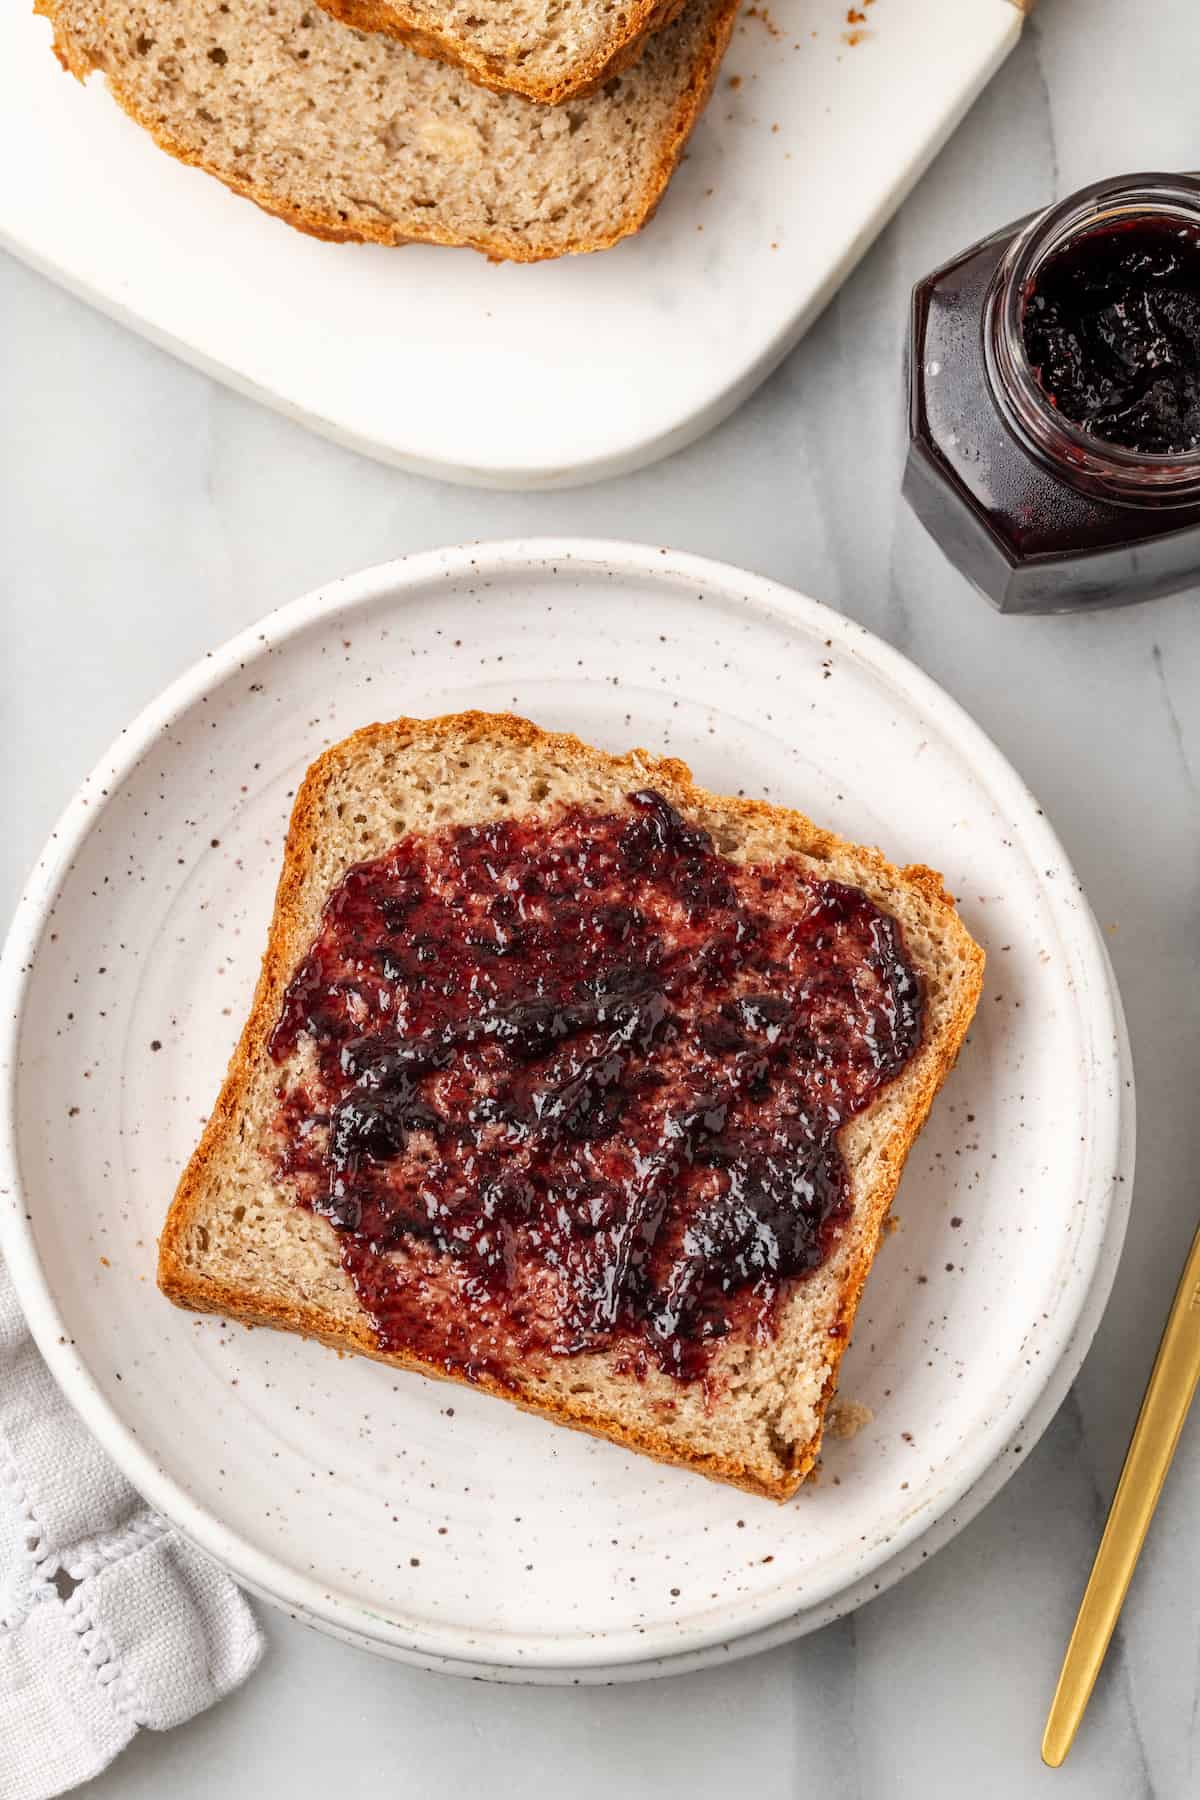 Overhead view of gluten-free sandwich bread spread with jam